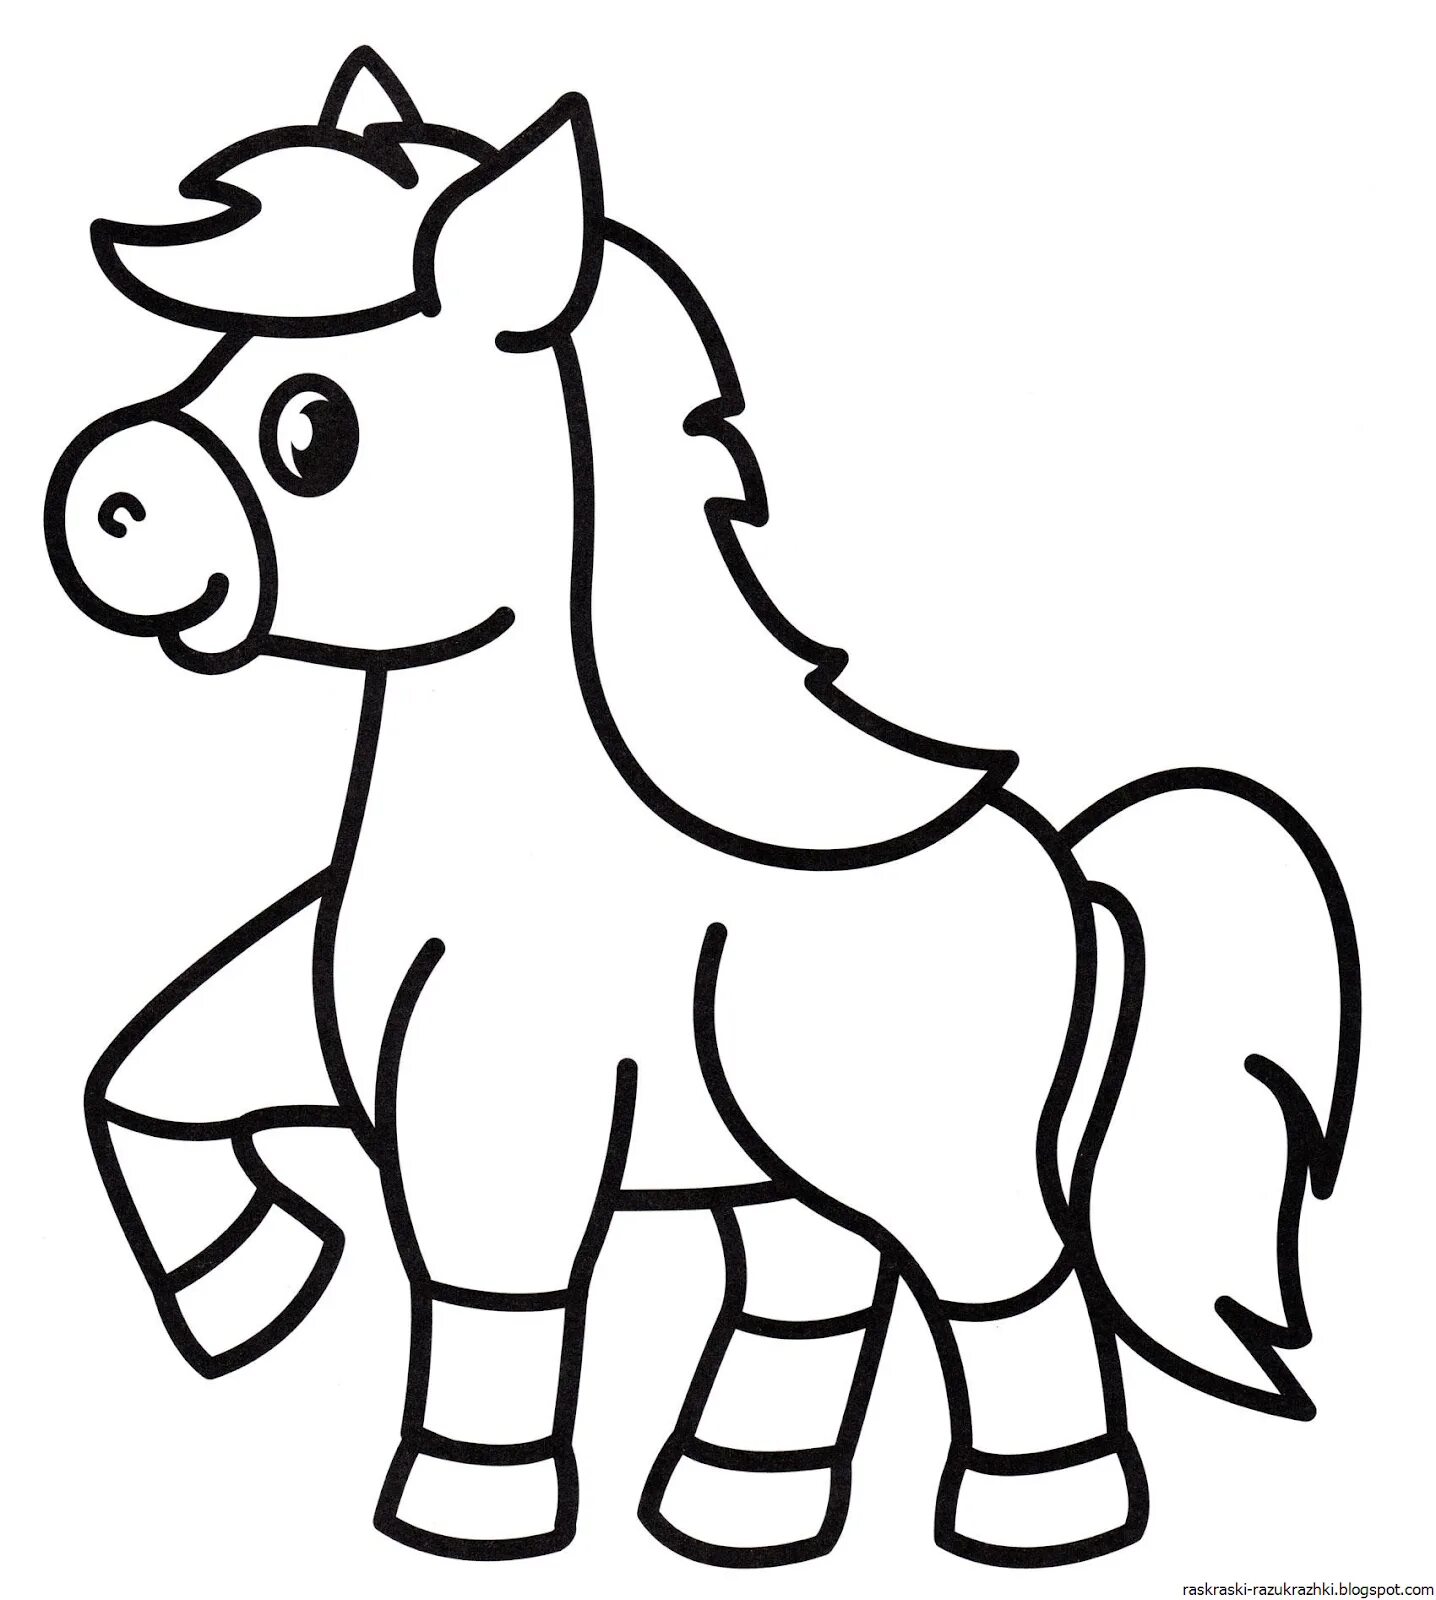 Раскраски раскраск, Раскраска Раскраски Лошади лошади лошадка раскраска для детей Лошадка.